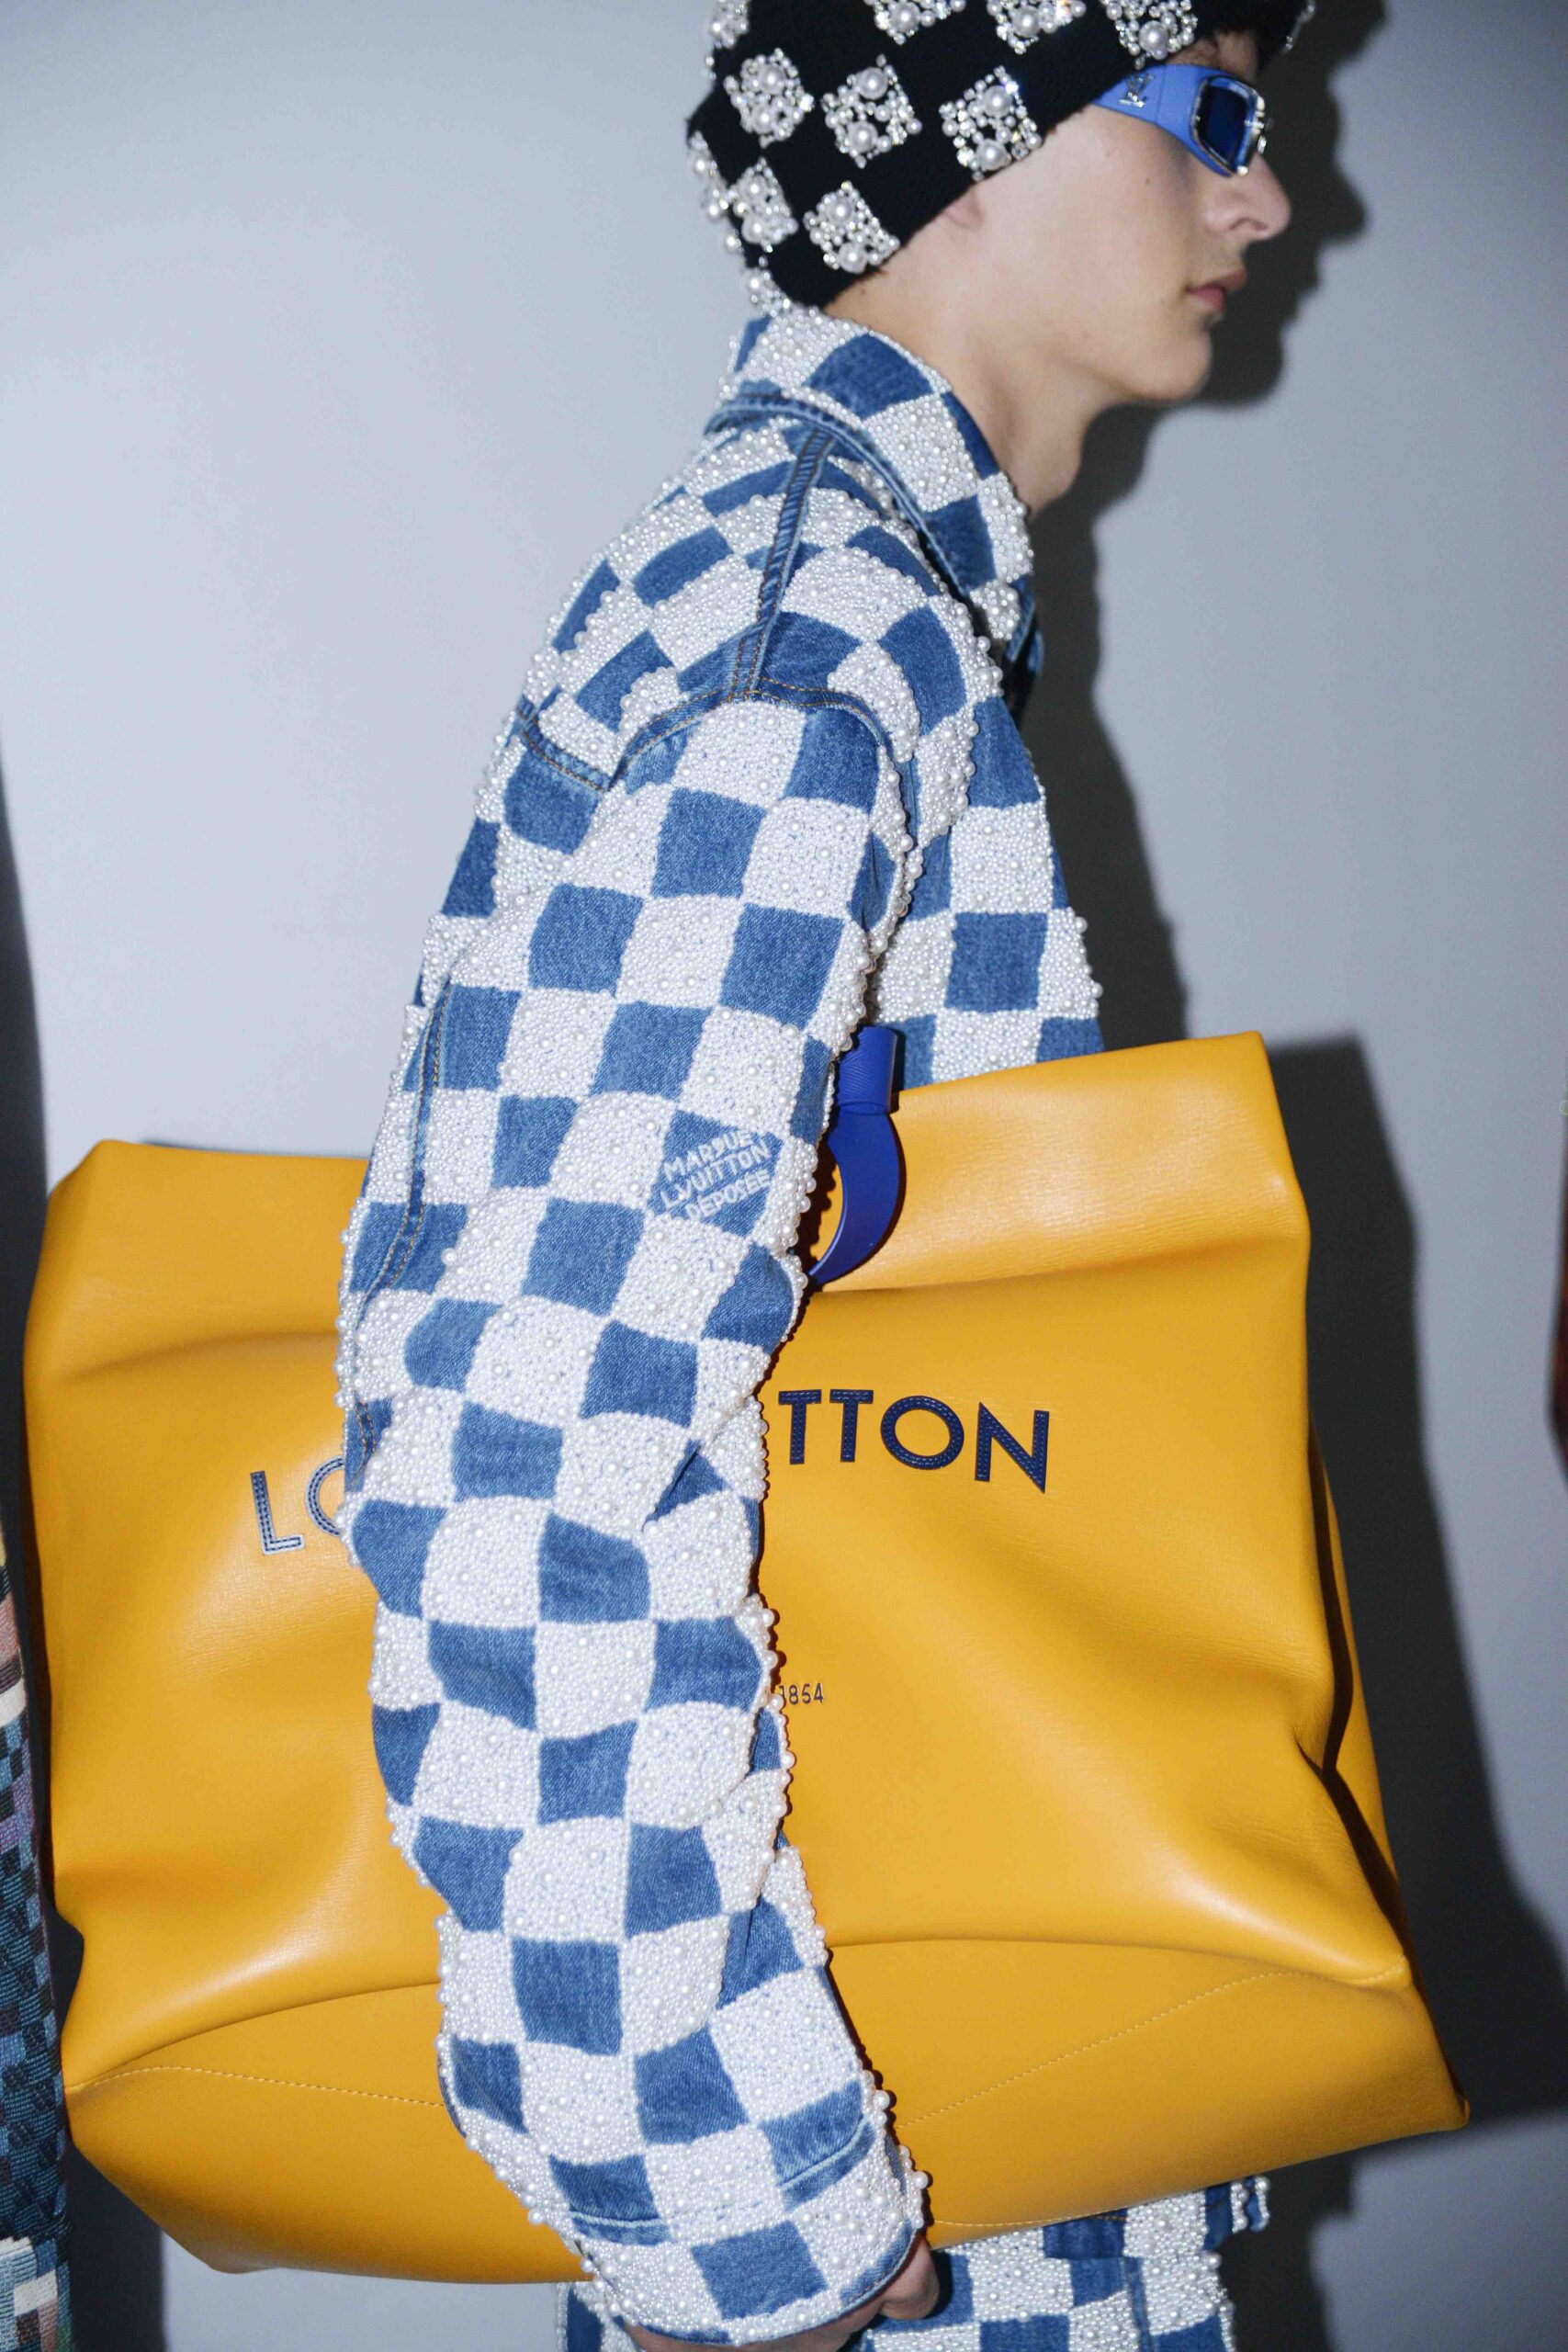 Louis Vuitton, Bags, Louis Vuitton Shopping Bags